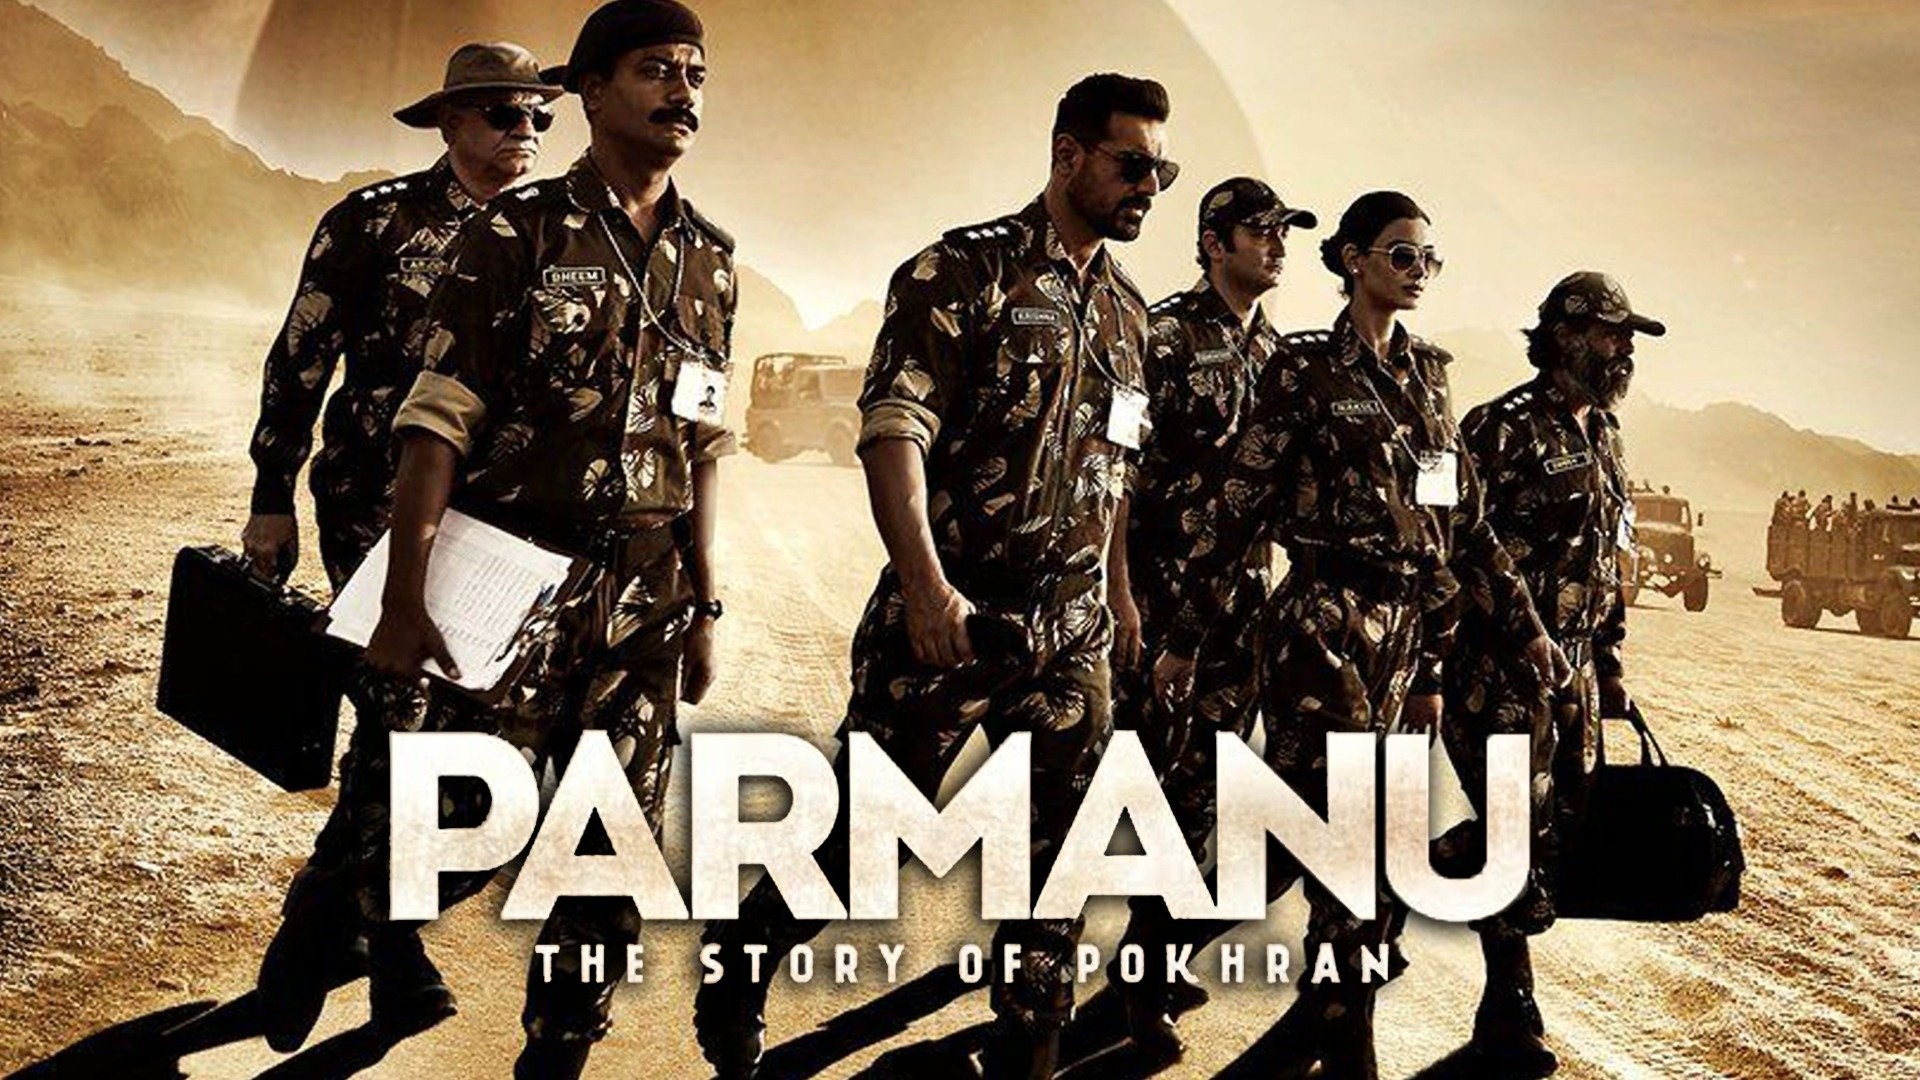 Parmanu: The Story of Pokhran (Hindi) | Movies to watch this week in  Chennai (May 25 weekend)